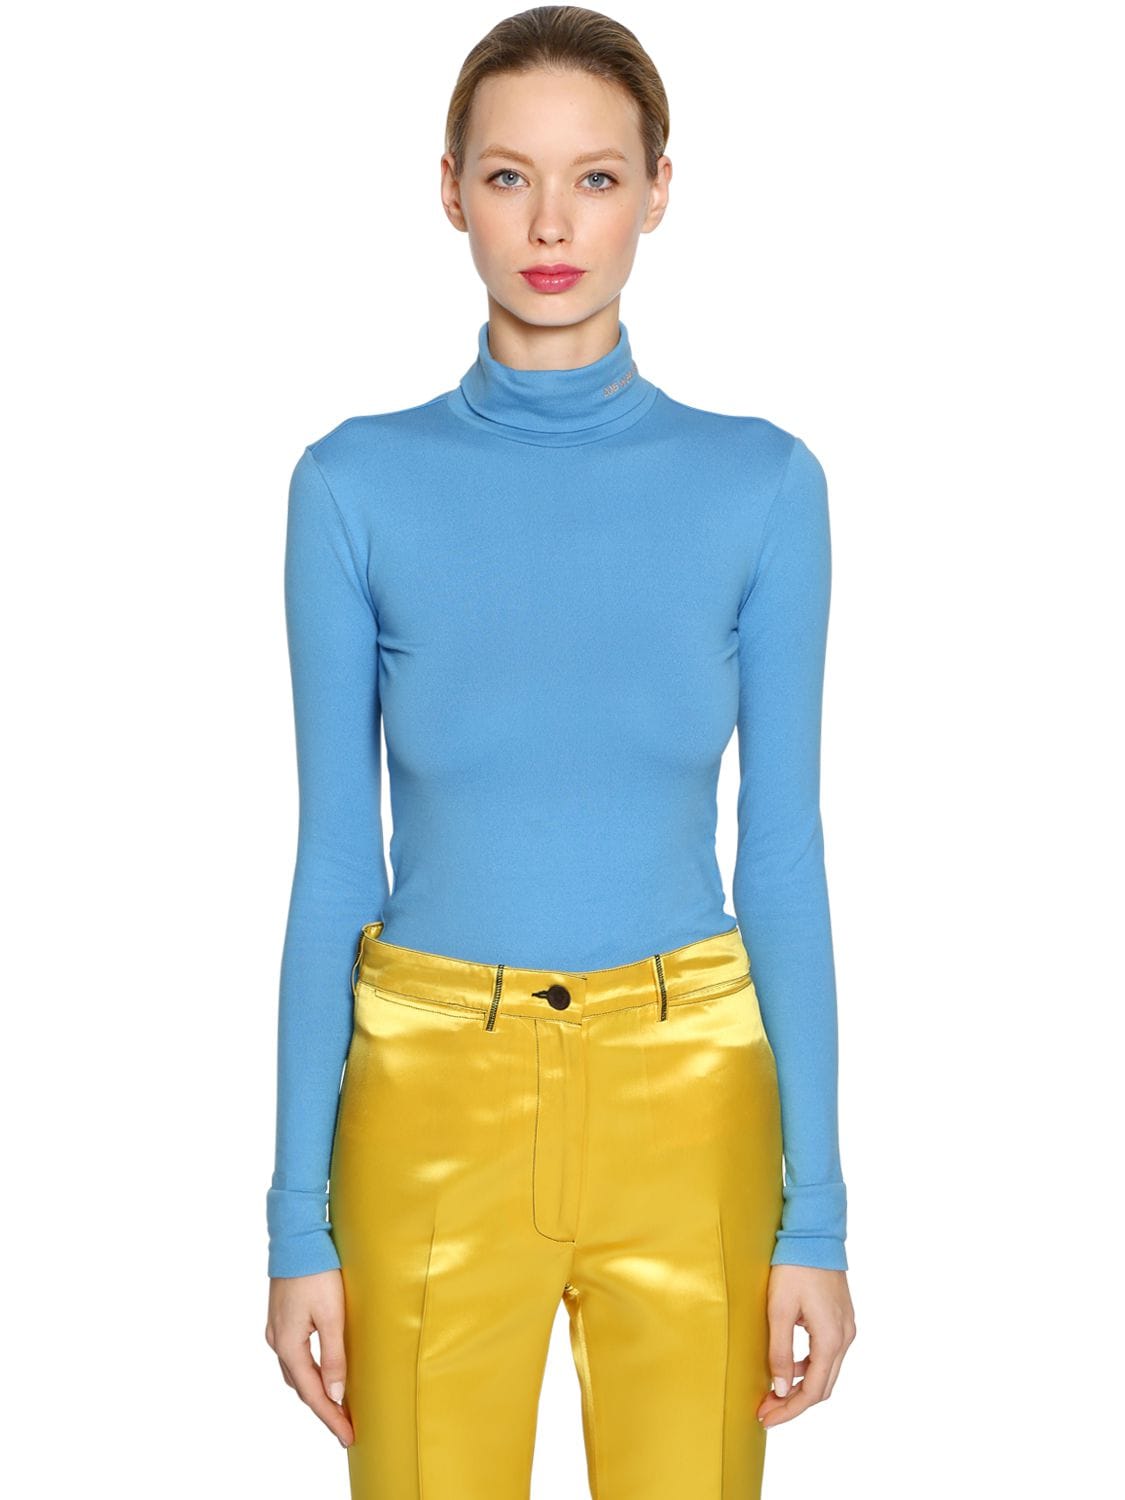 Calvin Klein 205w39nyc Turtleneck Cotton Jersey Top In Blue